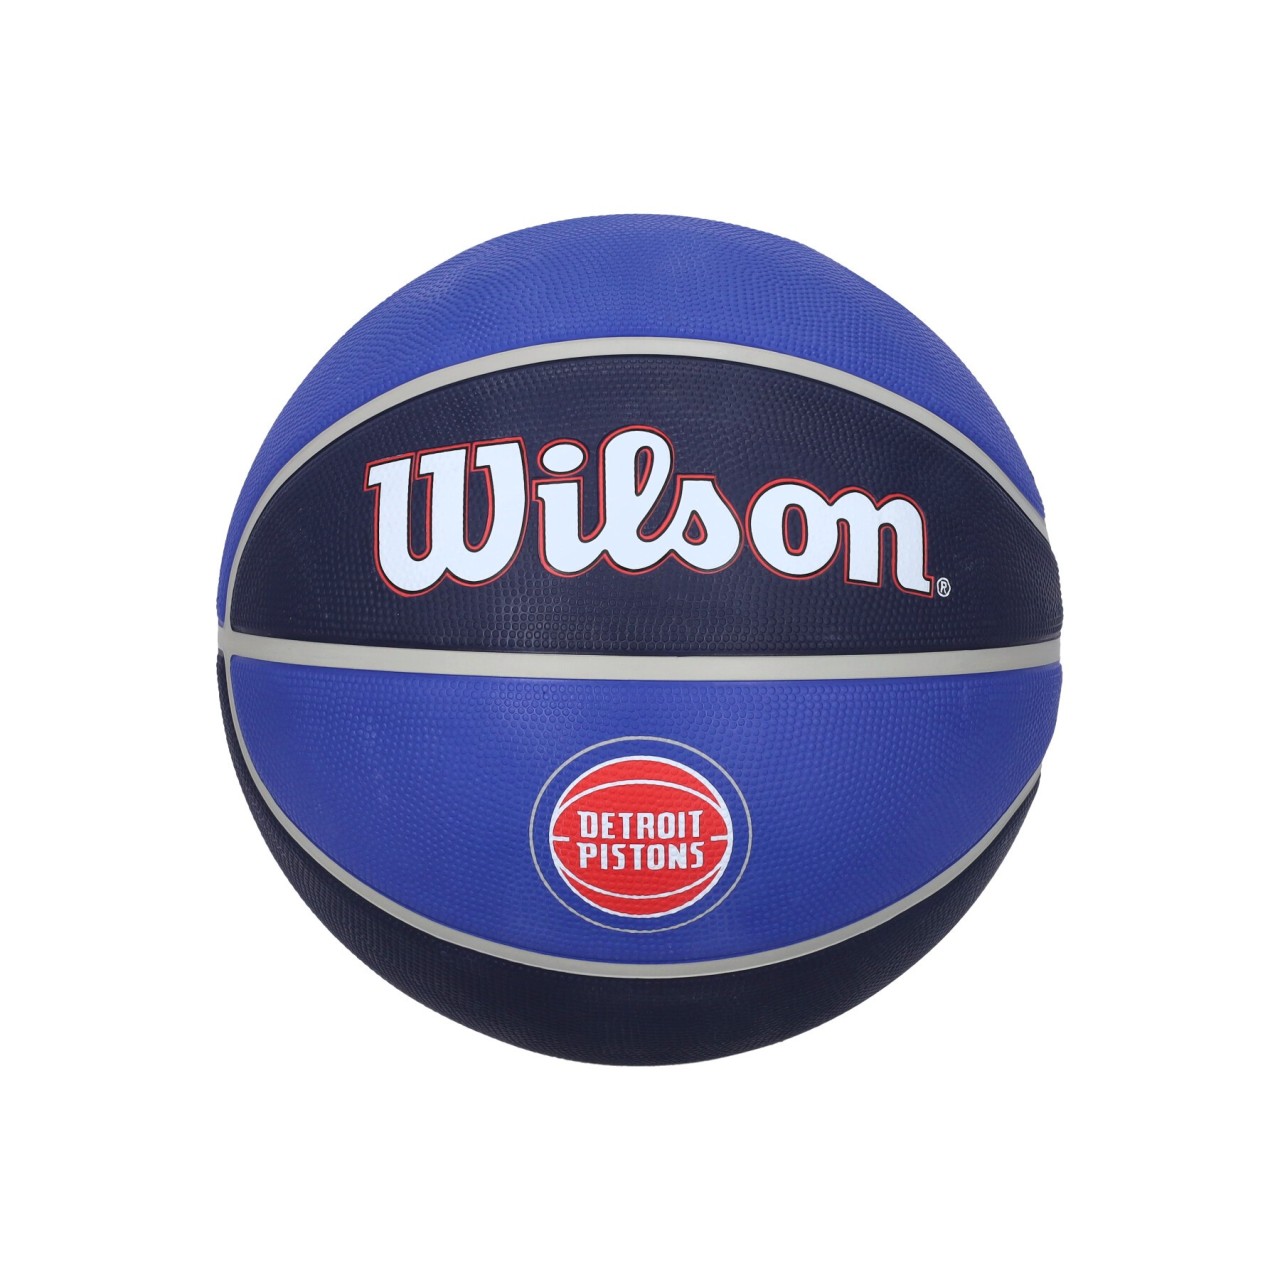 WILSON TEAM NBA TEAM TRIBUTE BASKETBALL SIZE 7 DETPIS WTB1300XBDET